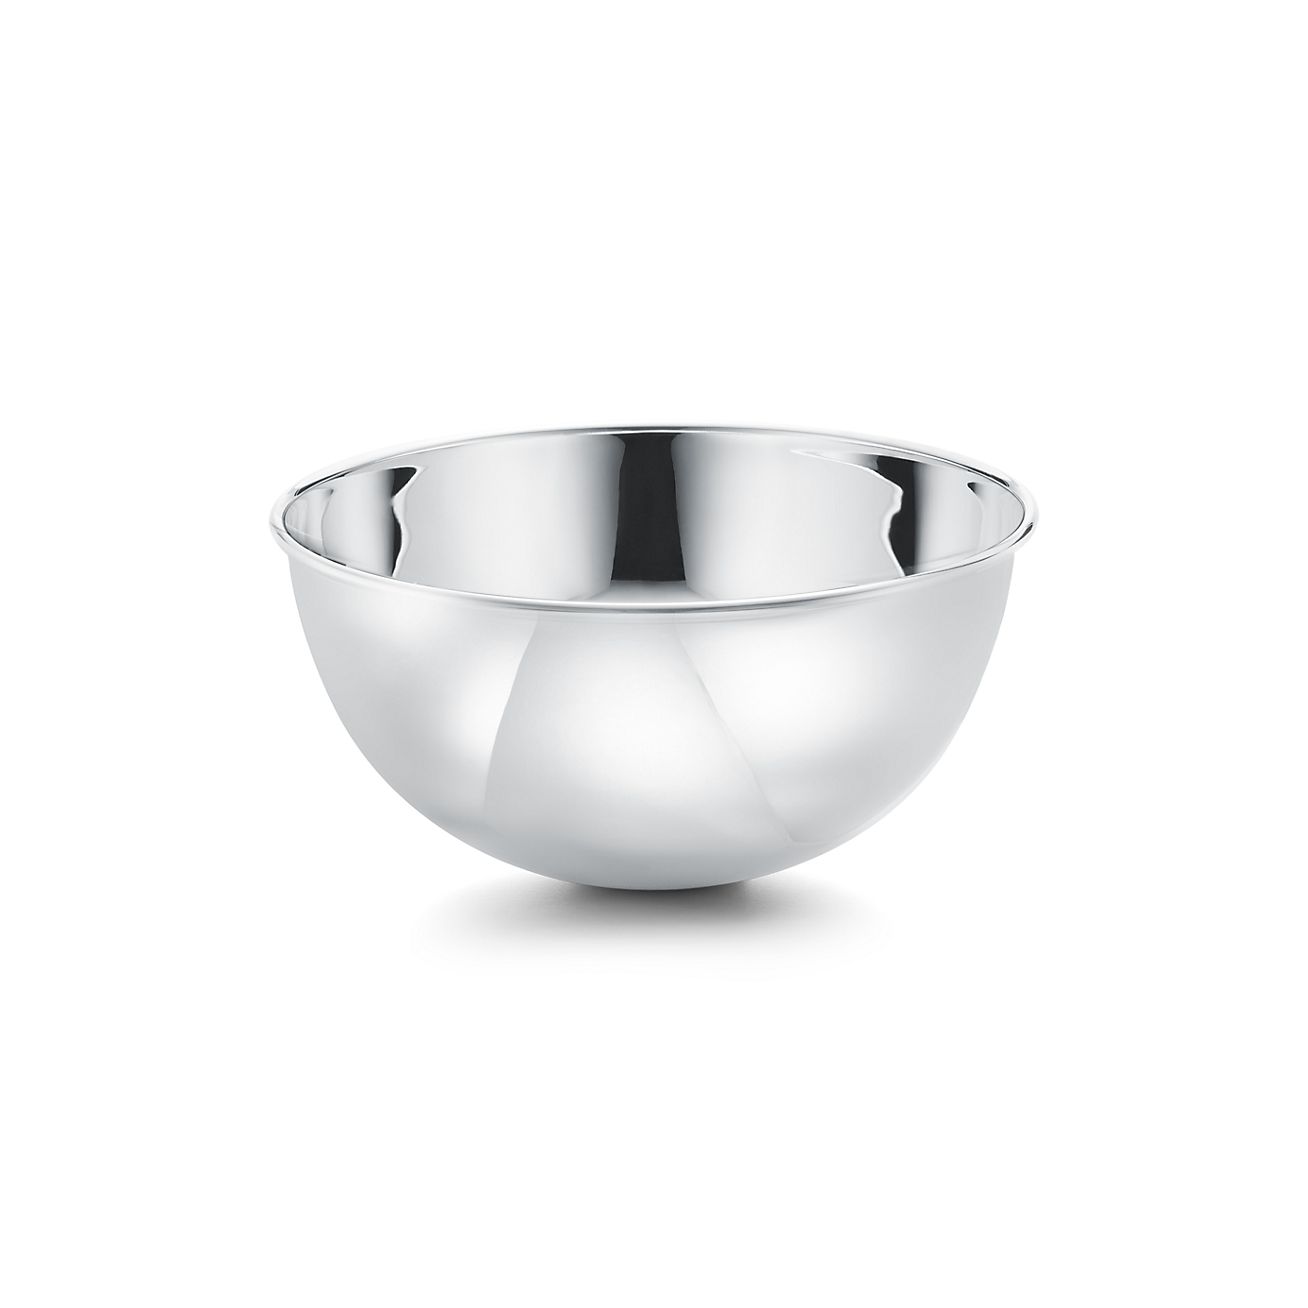 tiffany sterling silver bowl